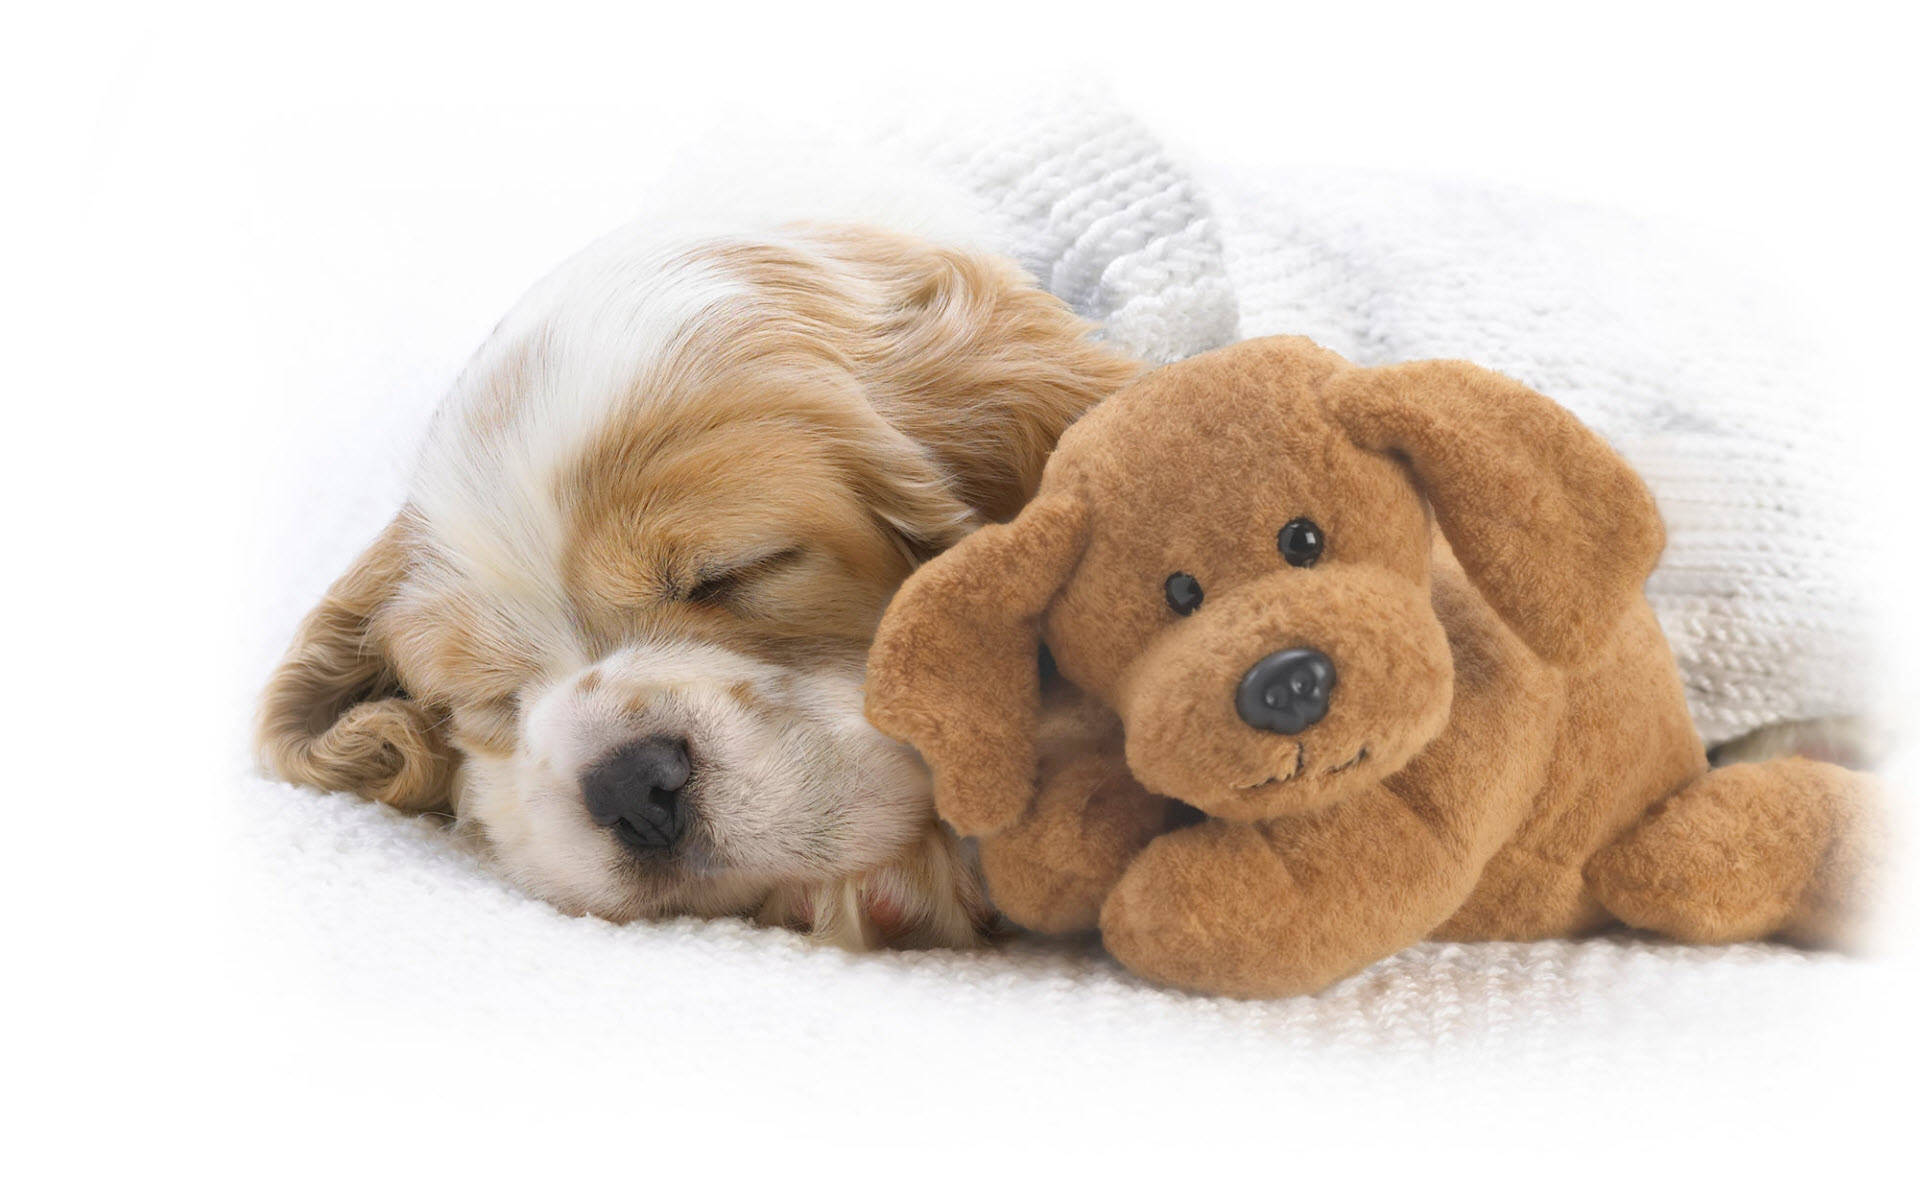 Sleeping Baby Dog With Teddy Bear Background